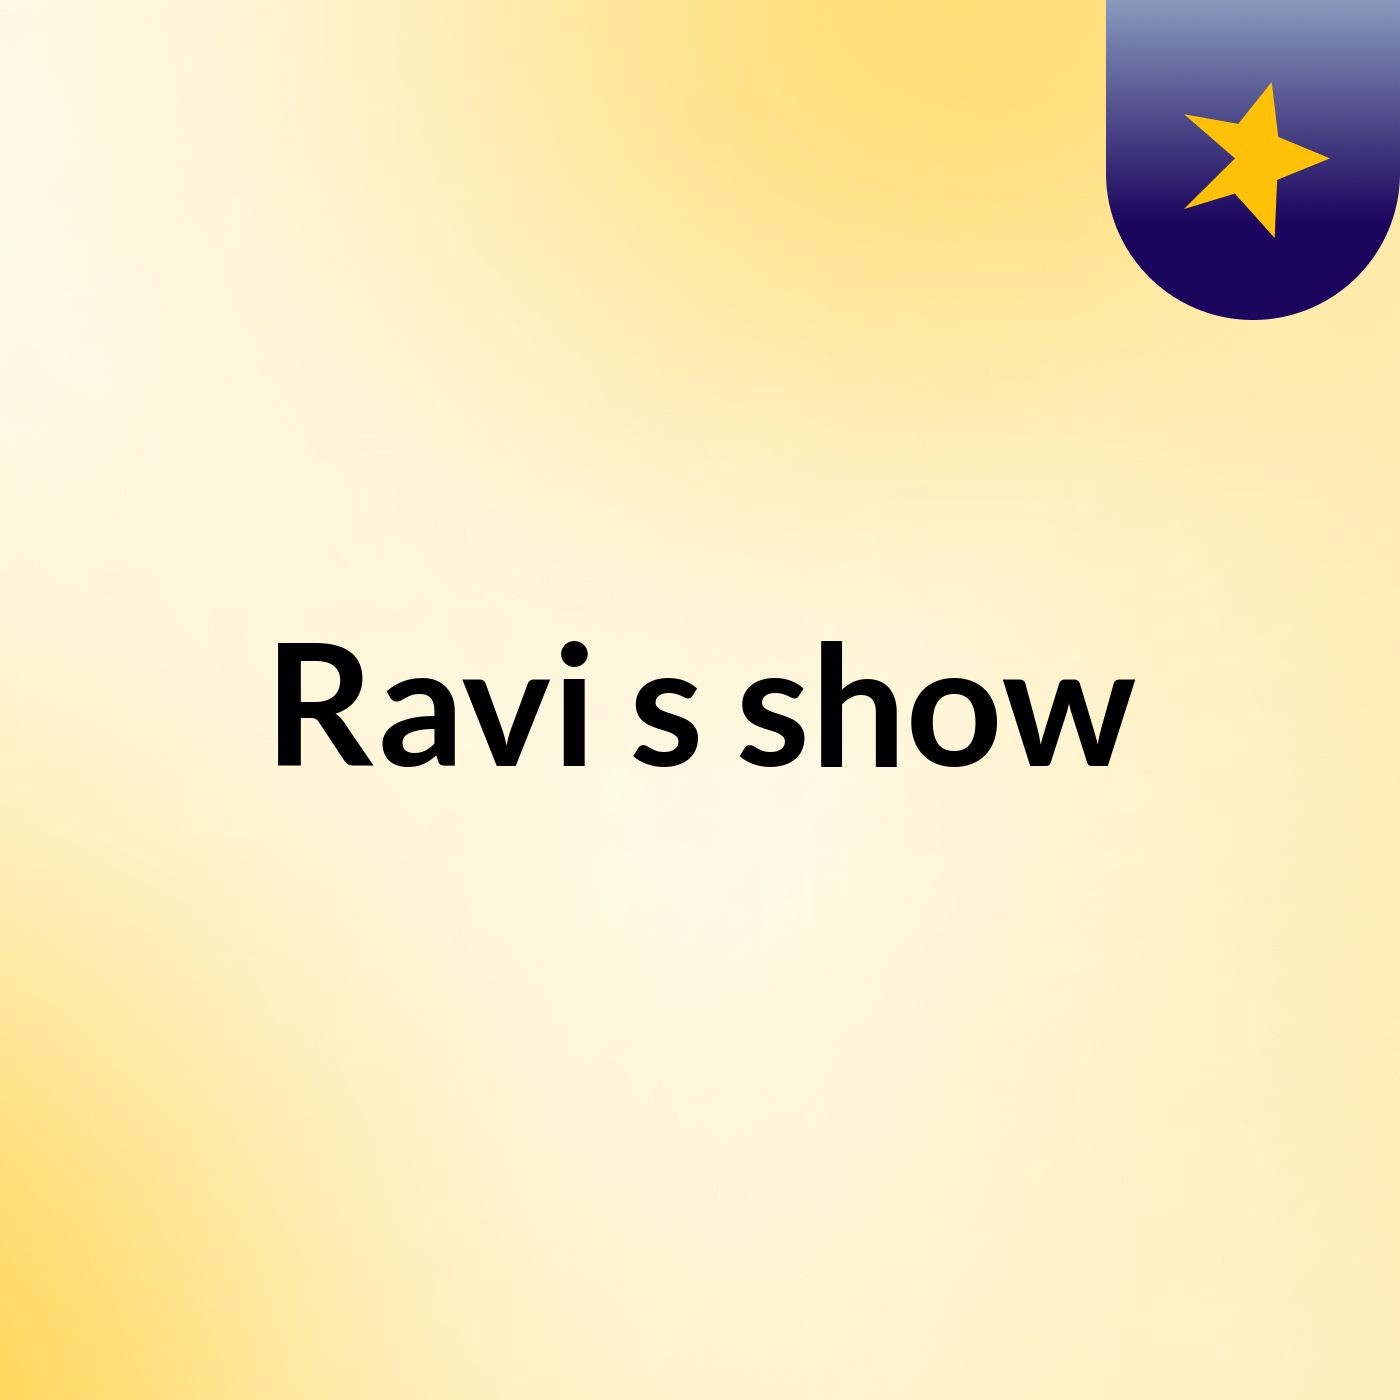 Ravi's show